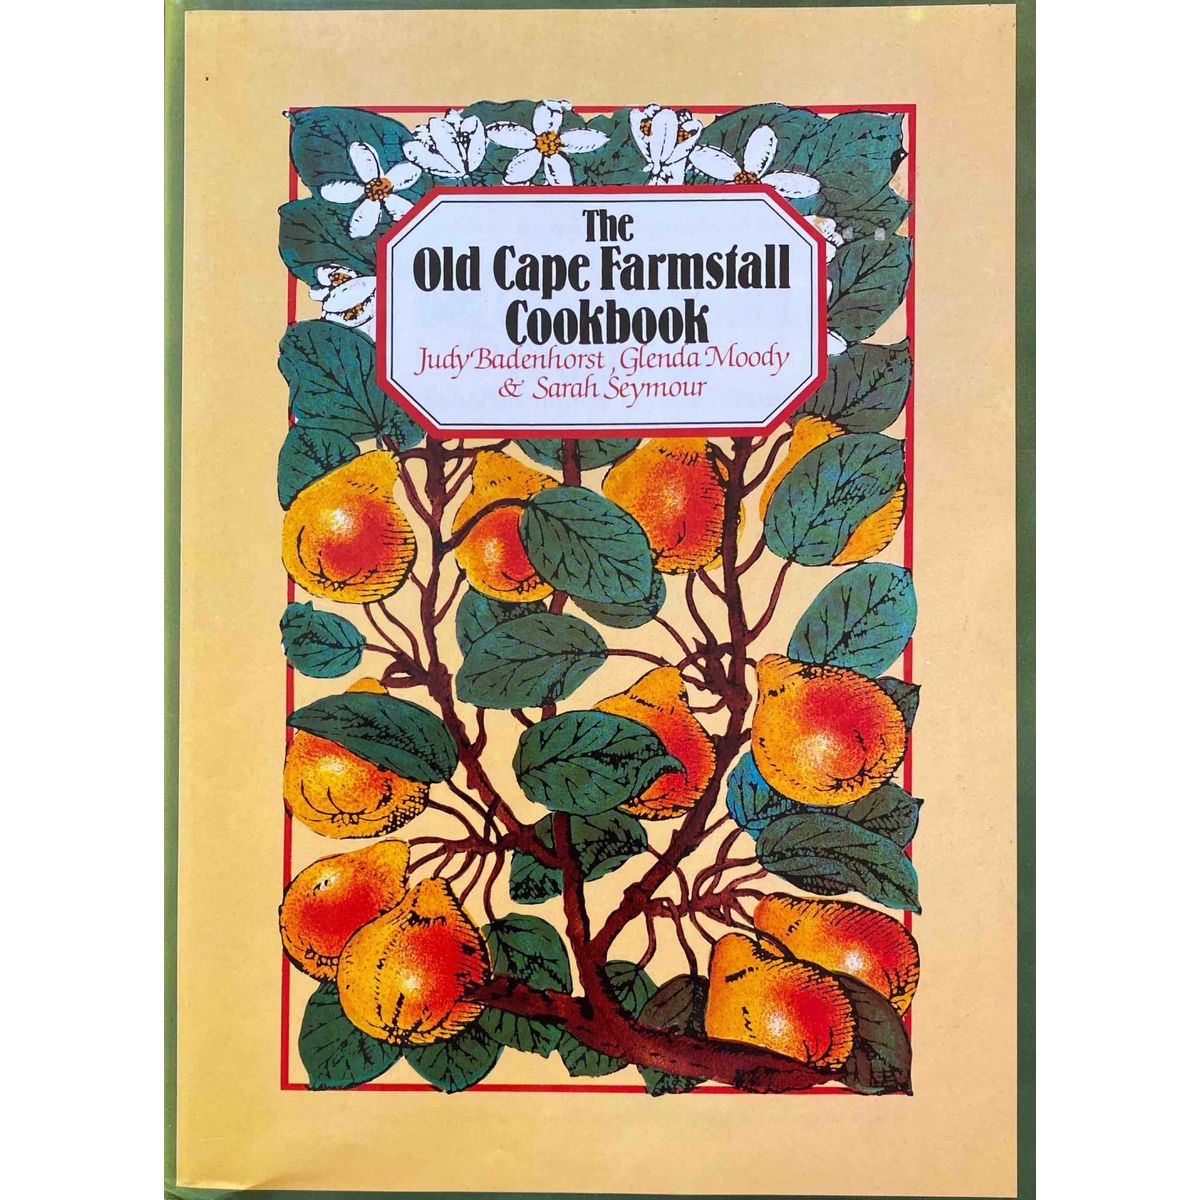 ISBN: 9780909238834 / 0909238839 - The Old Cape Farmstall Cookbook by Judy Badenhorst, Glenda Moody & Sarah Seymour [1983]